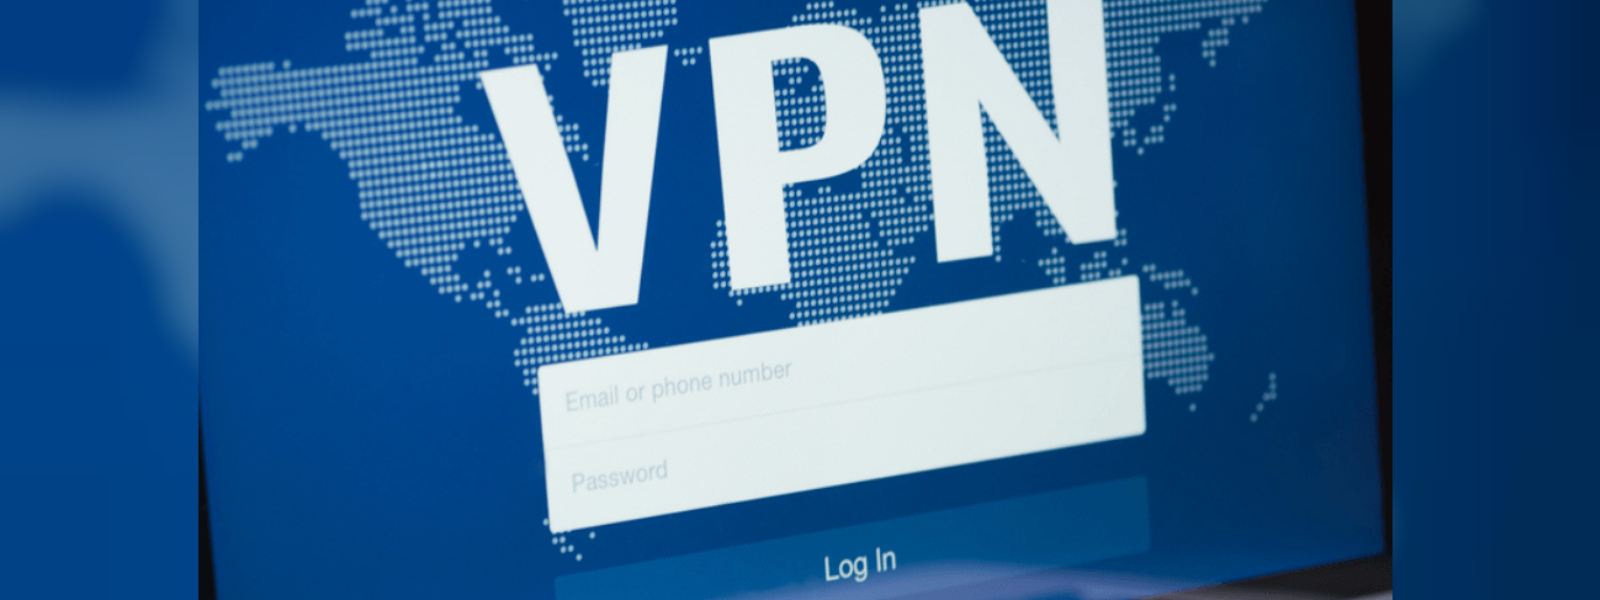 VPN නිසා විශාල පිරිසකගේ පුද්ගලික දත්ත අනාරක්ෂිතයි